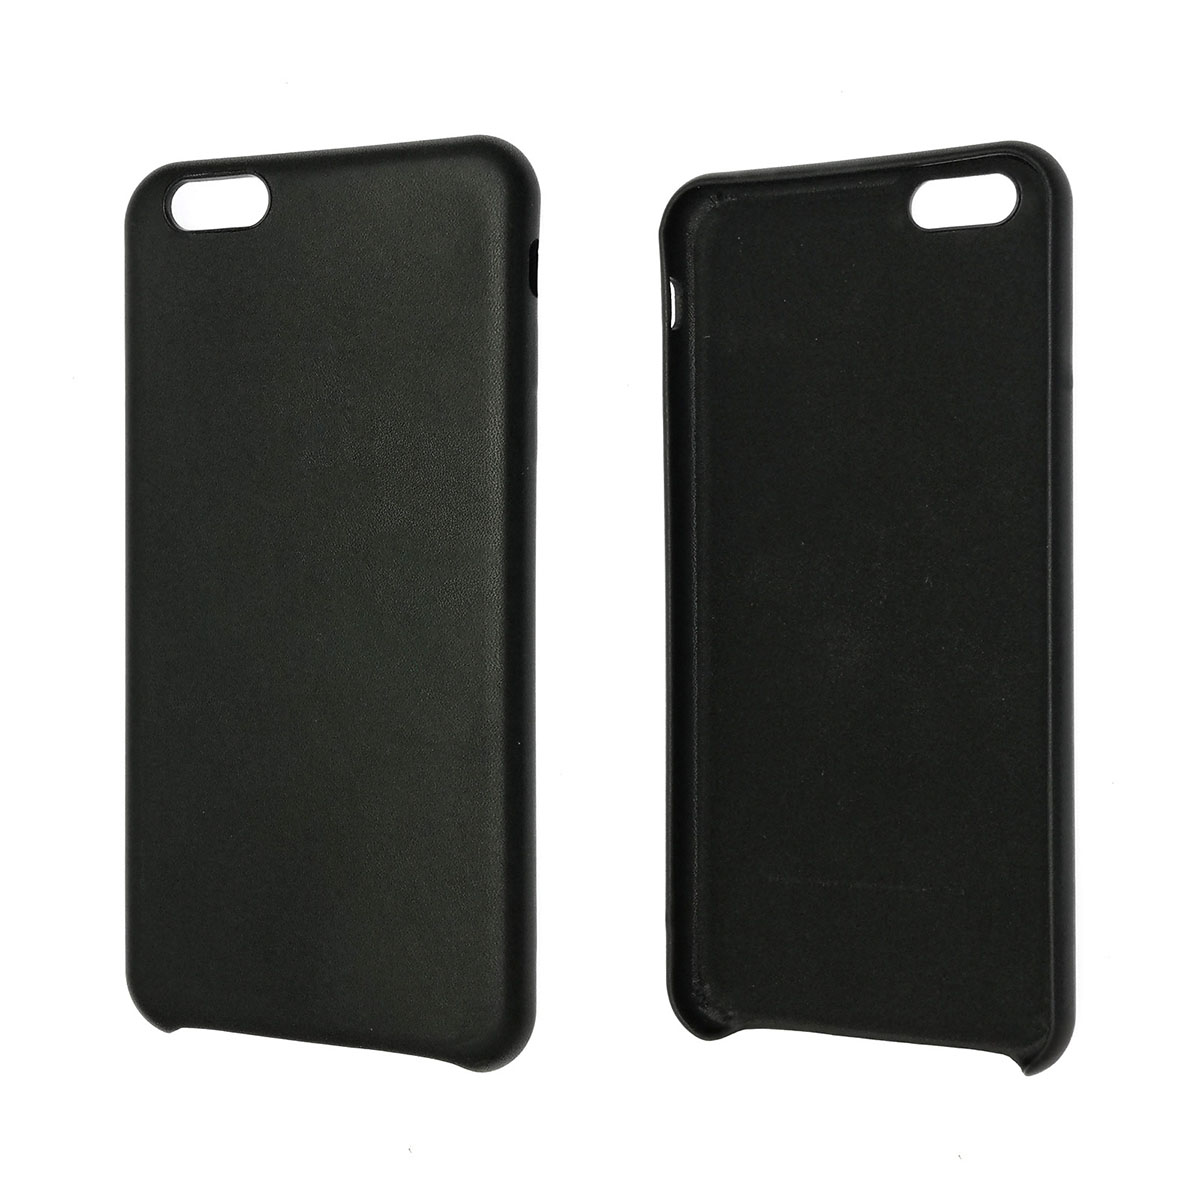 Чехол накладка Leather Case для APPLE iPhone 6 Plus, 6S Plus, экокожа, пластик, цвет черный.